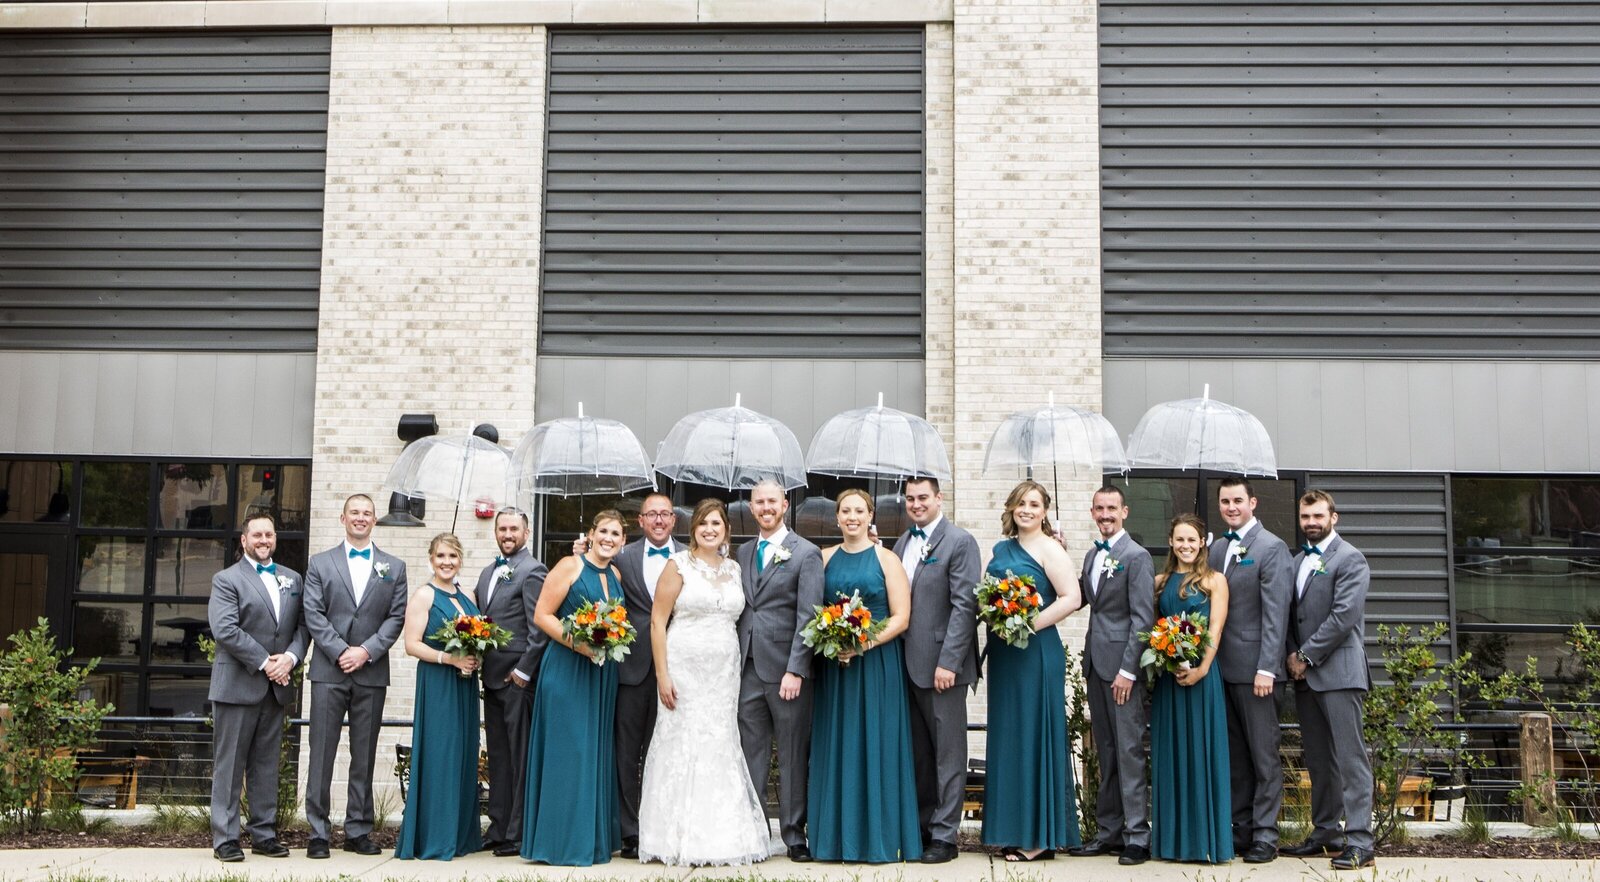 Wedding party holding umbrellas